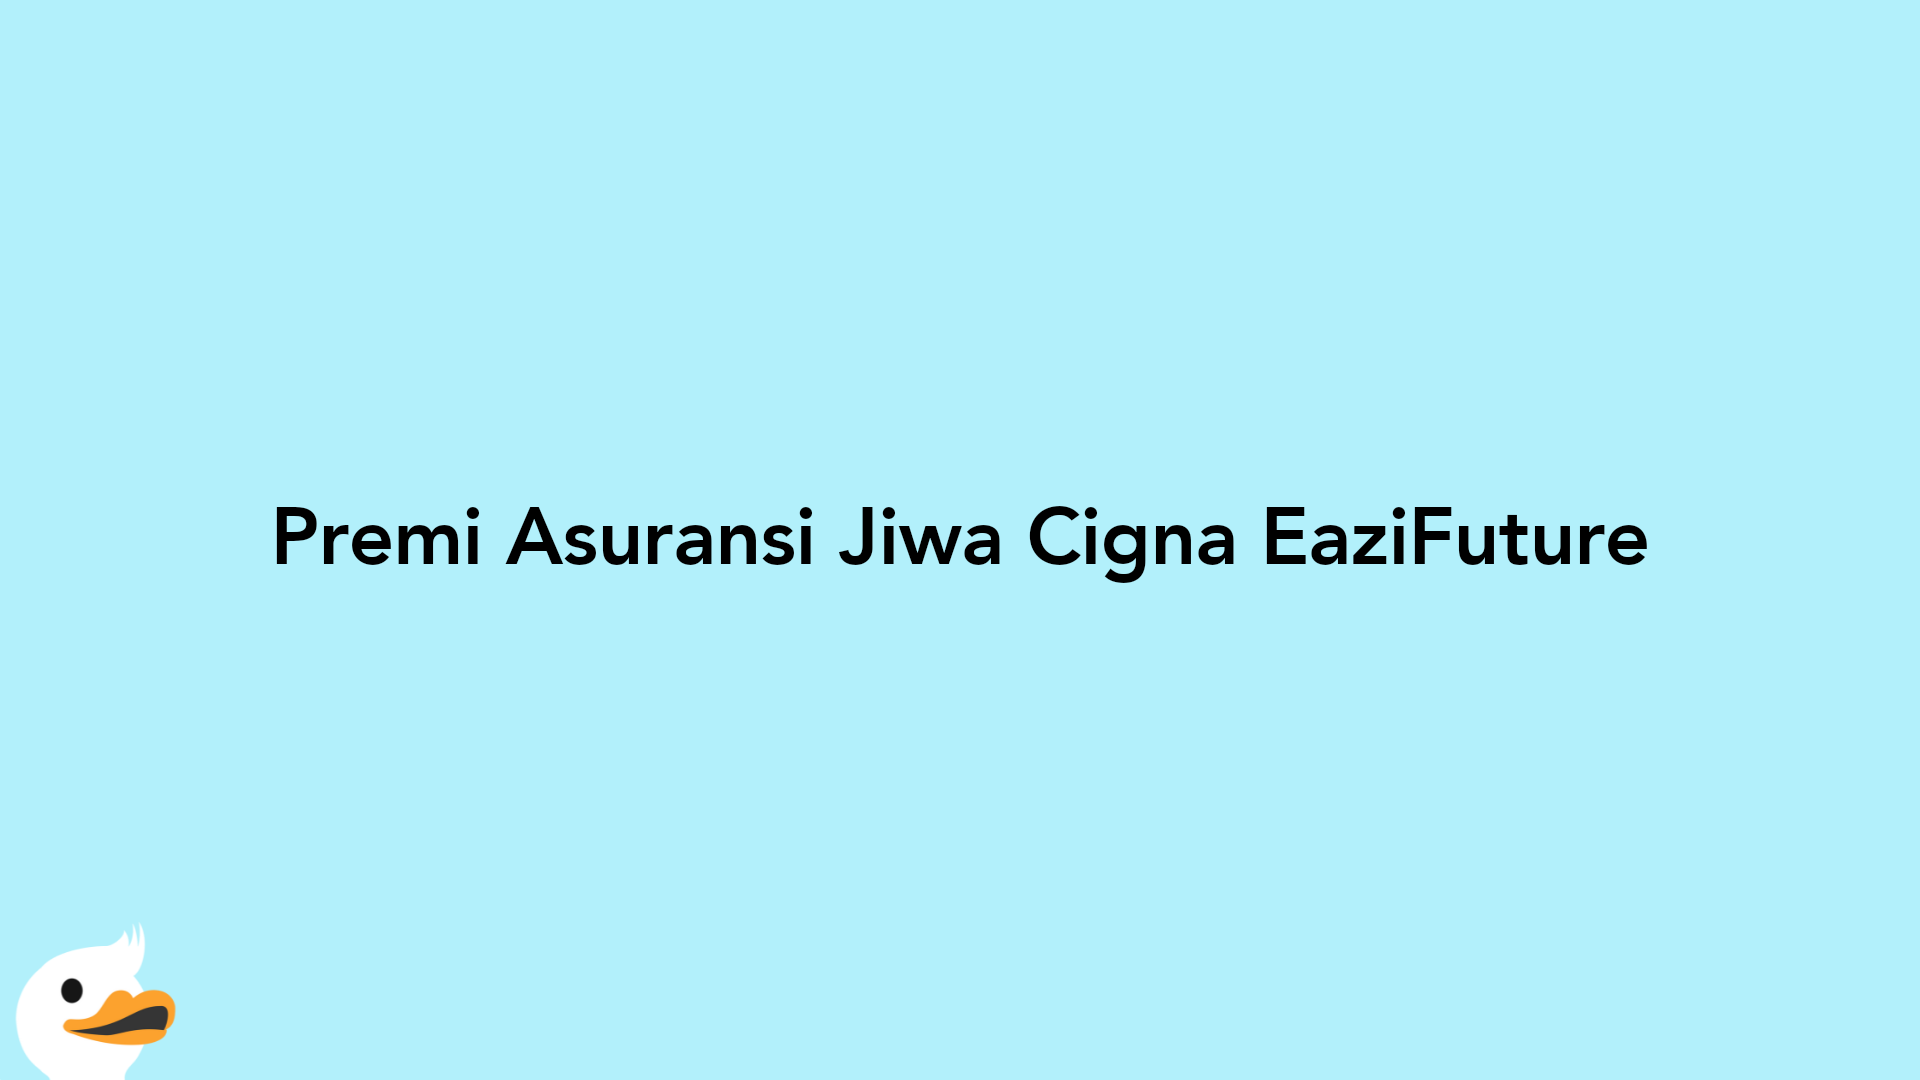 Premi Asuransi Jiwa Cigna EaziFuture